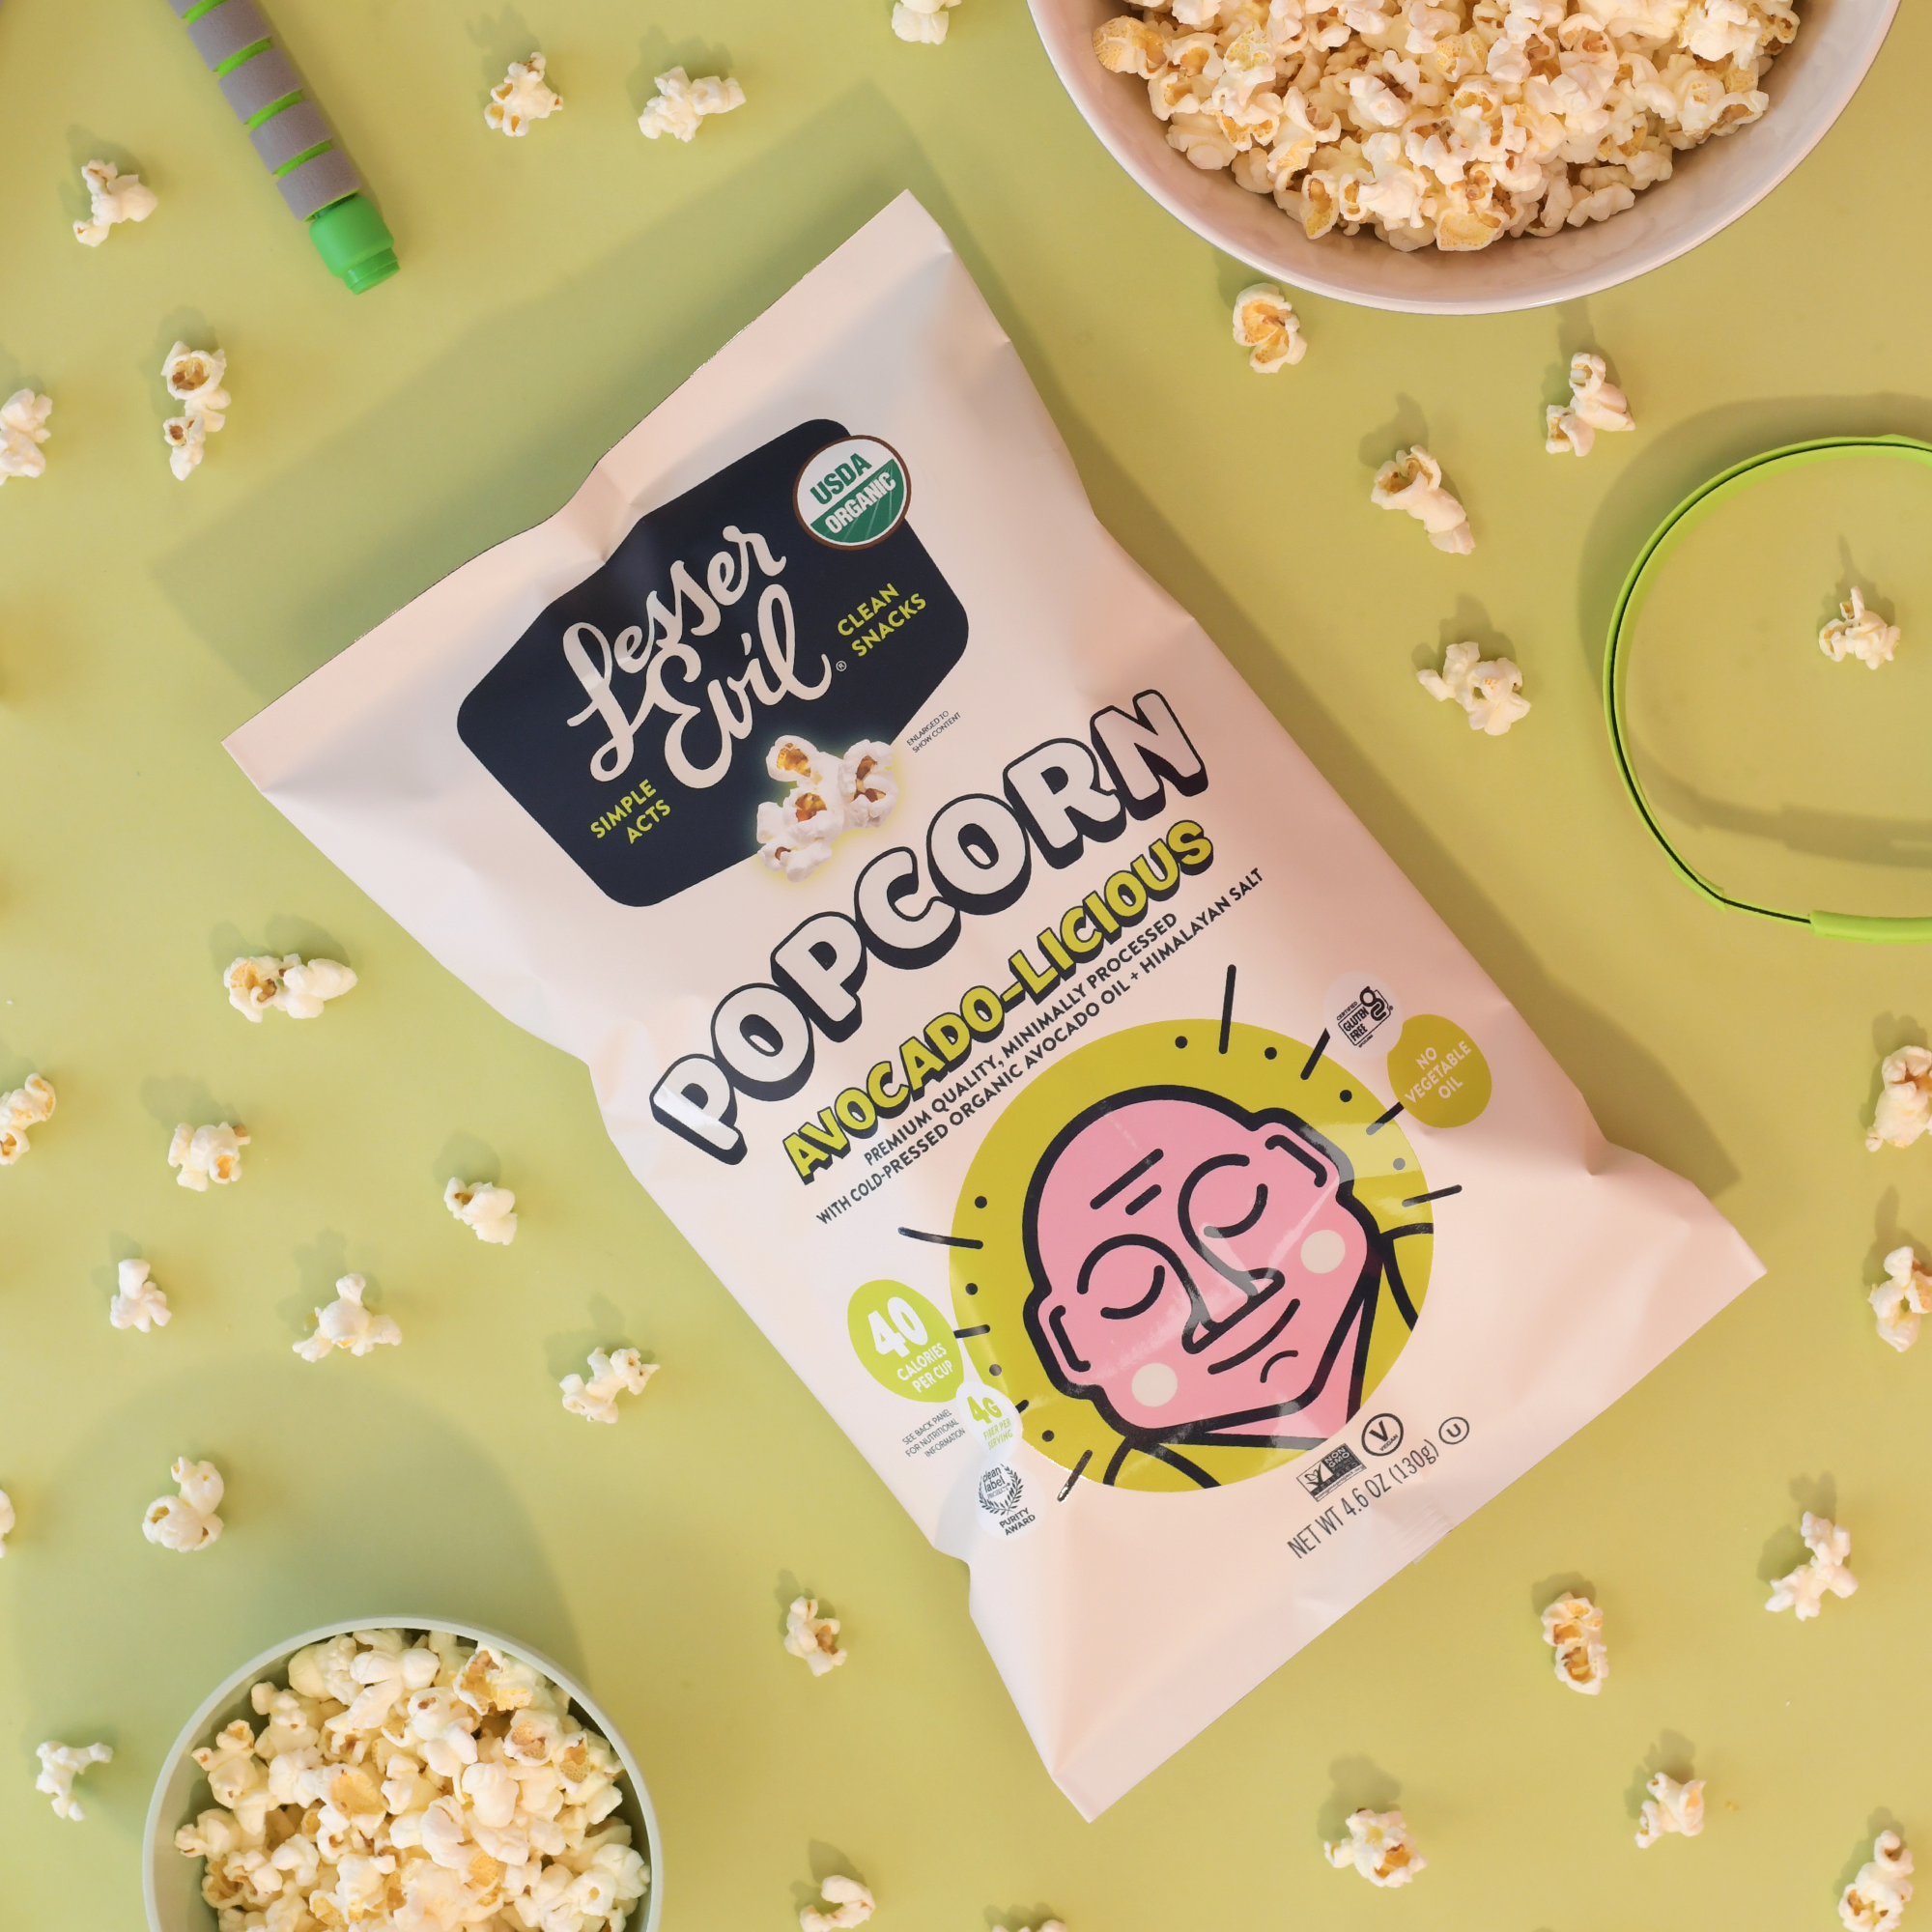 bag of avocado-licious organic popcorn